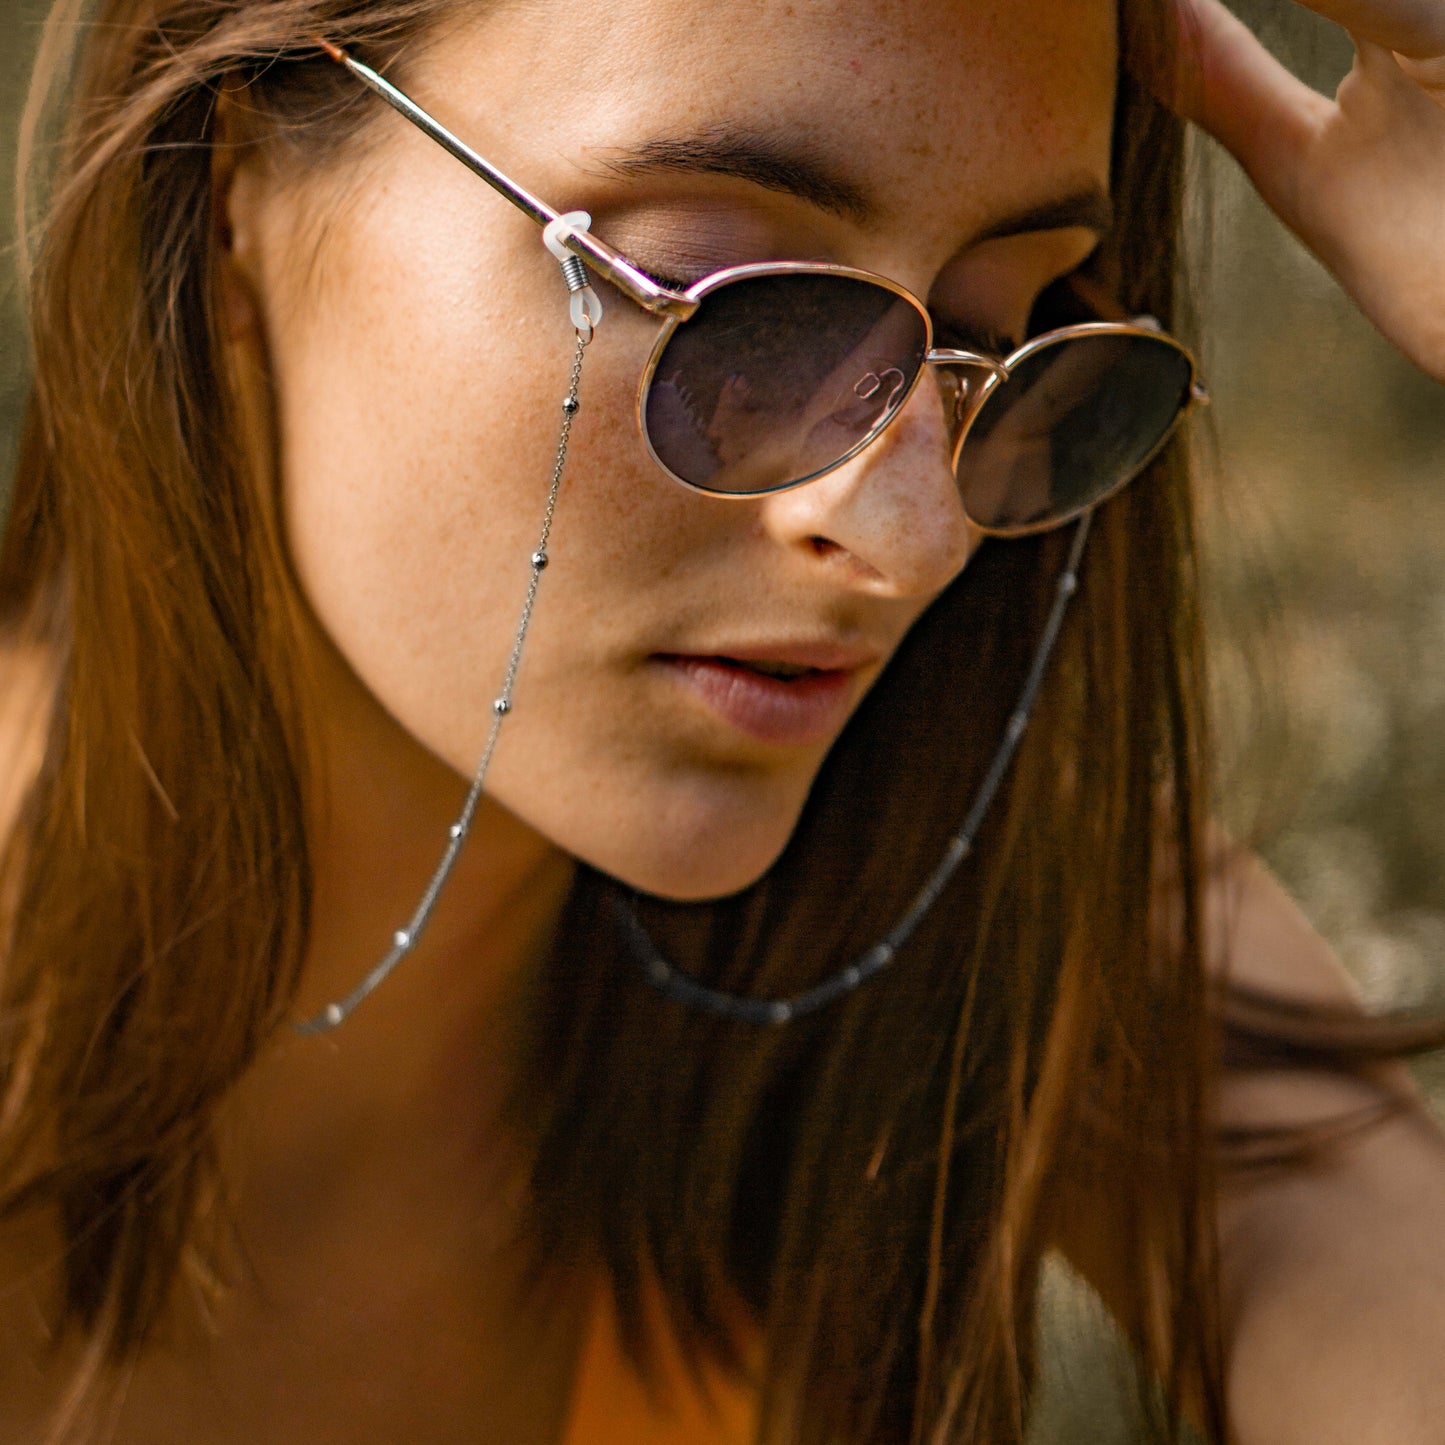 Playa Sunglasses Chain Silber